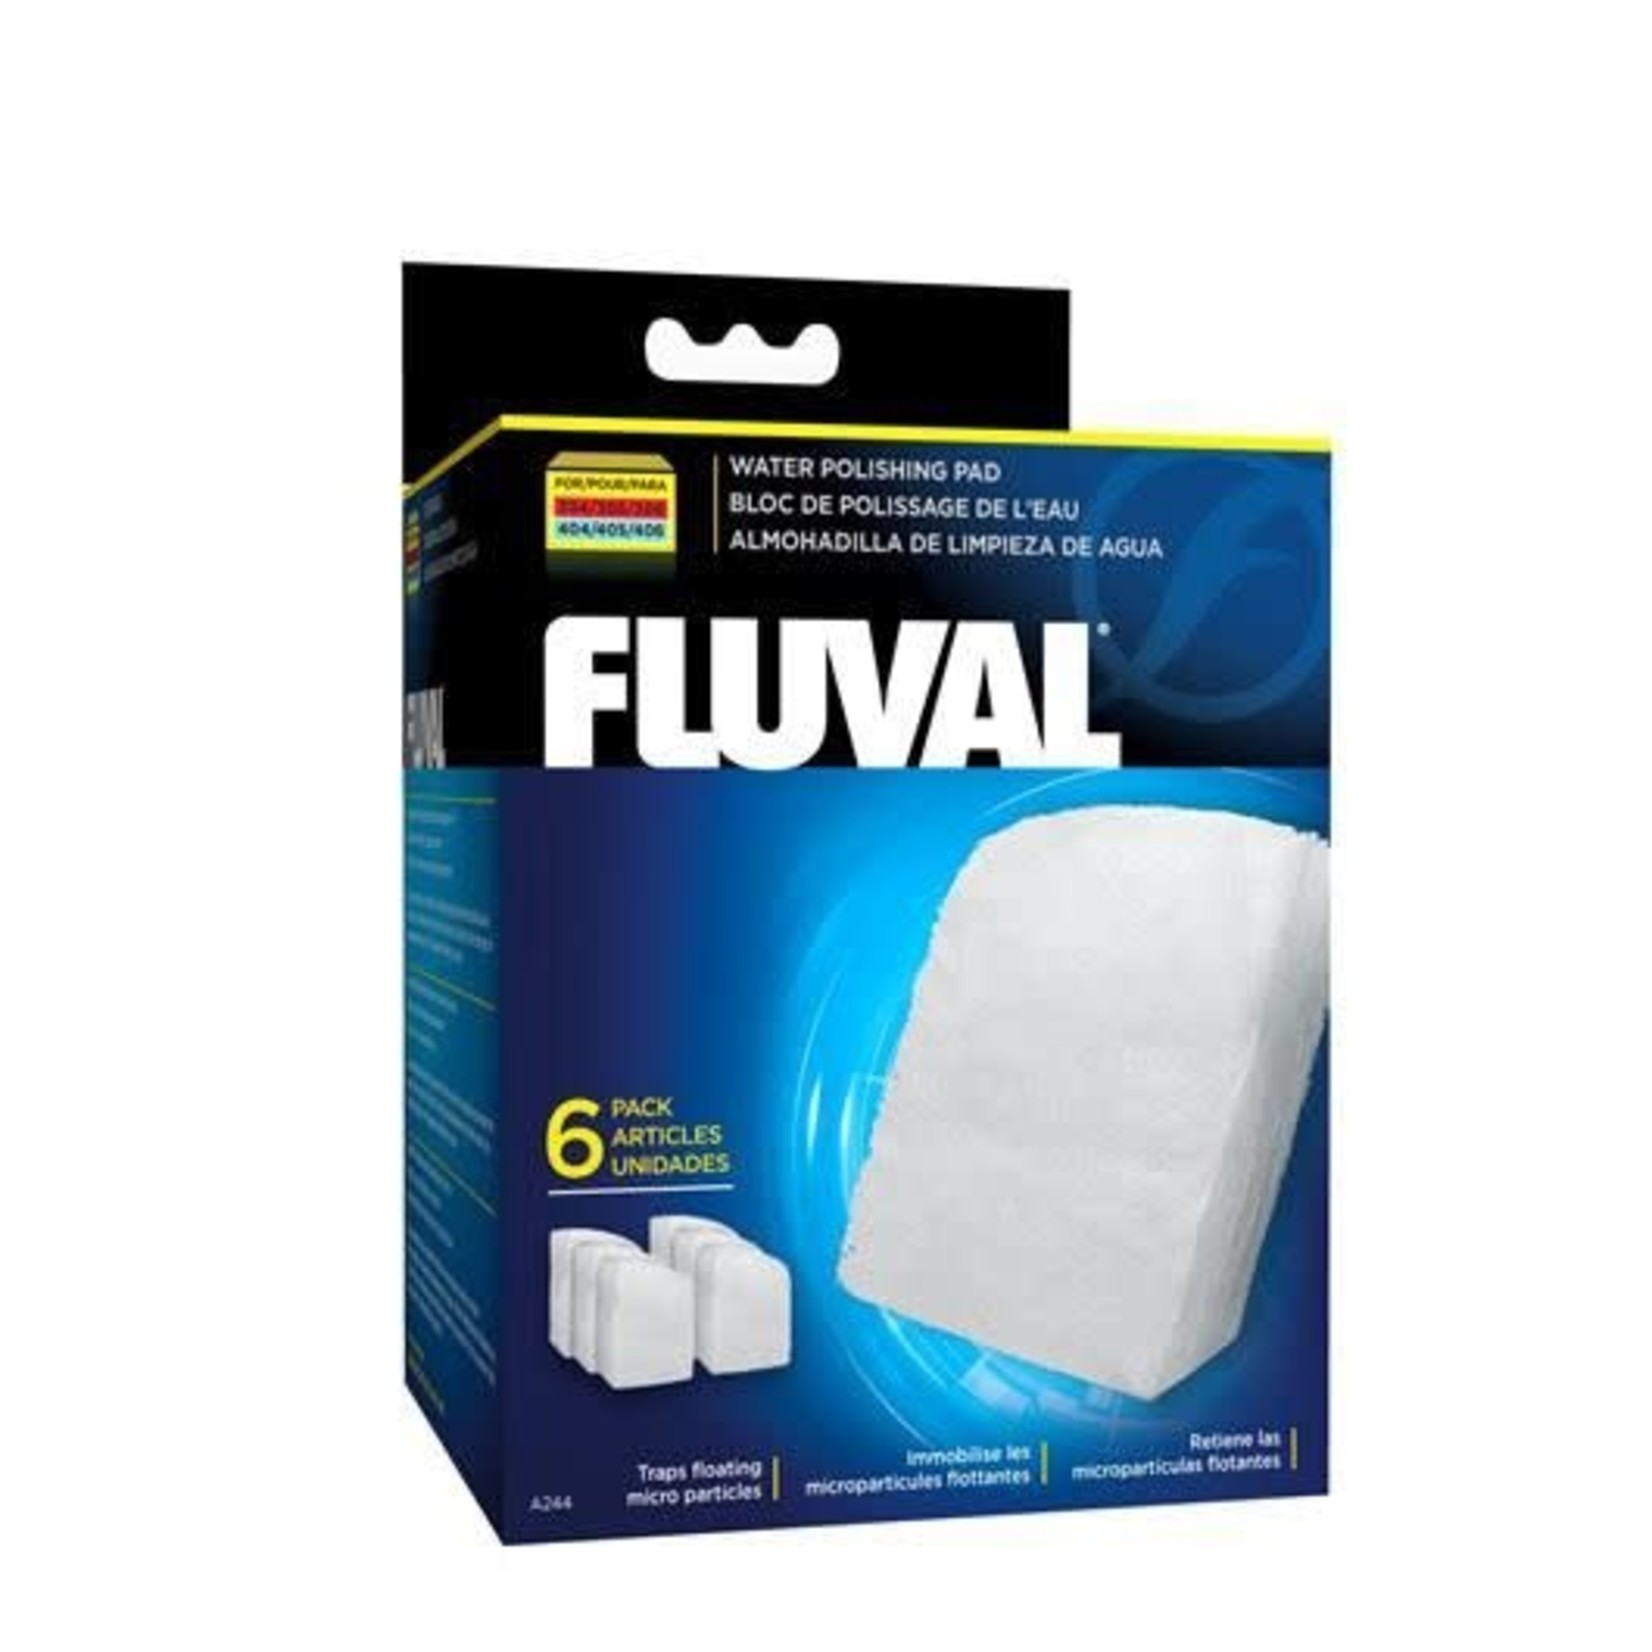 Fluval Fluval Water Polishing Pad, Fits 304/305/404/405 Models (6/Pack)